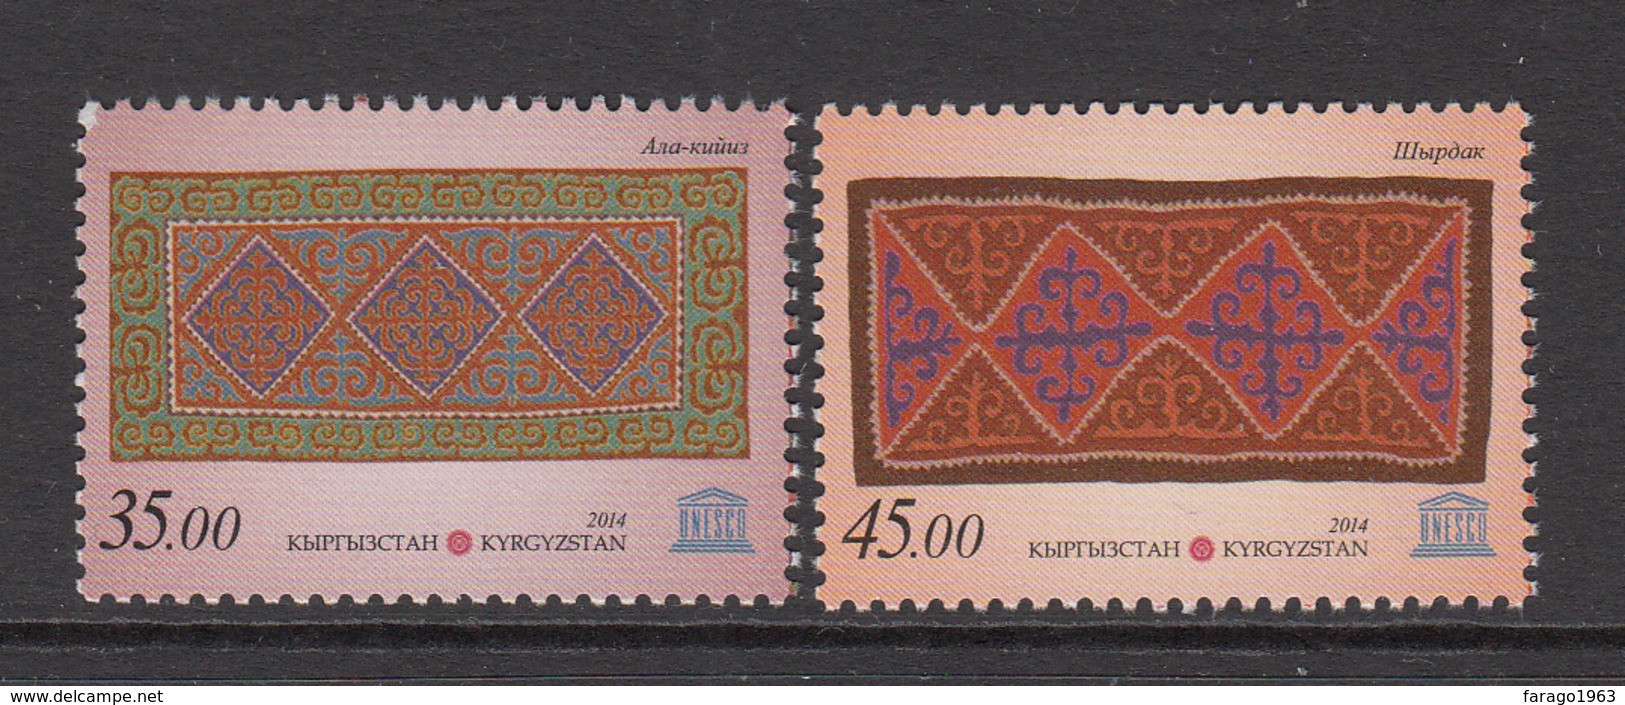 2014 Kyrgyzstan Traditional Carpets Set Of 2 MNH - Kirghizistan